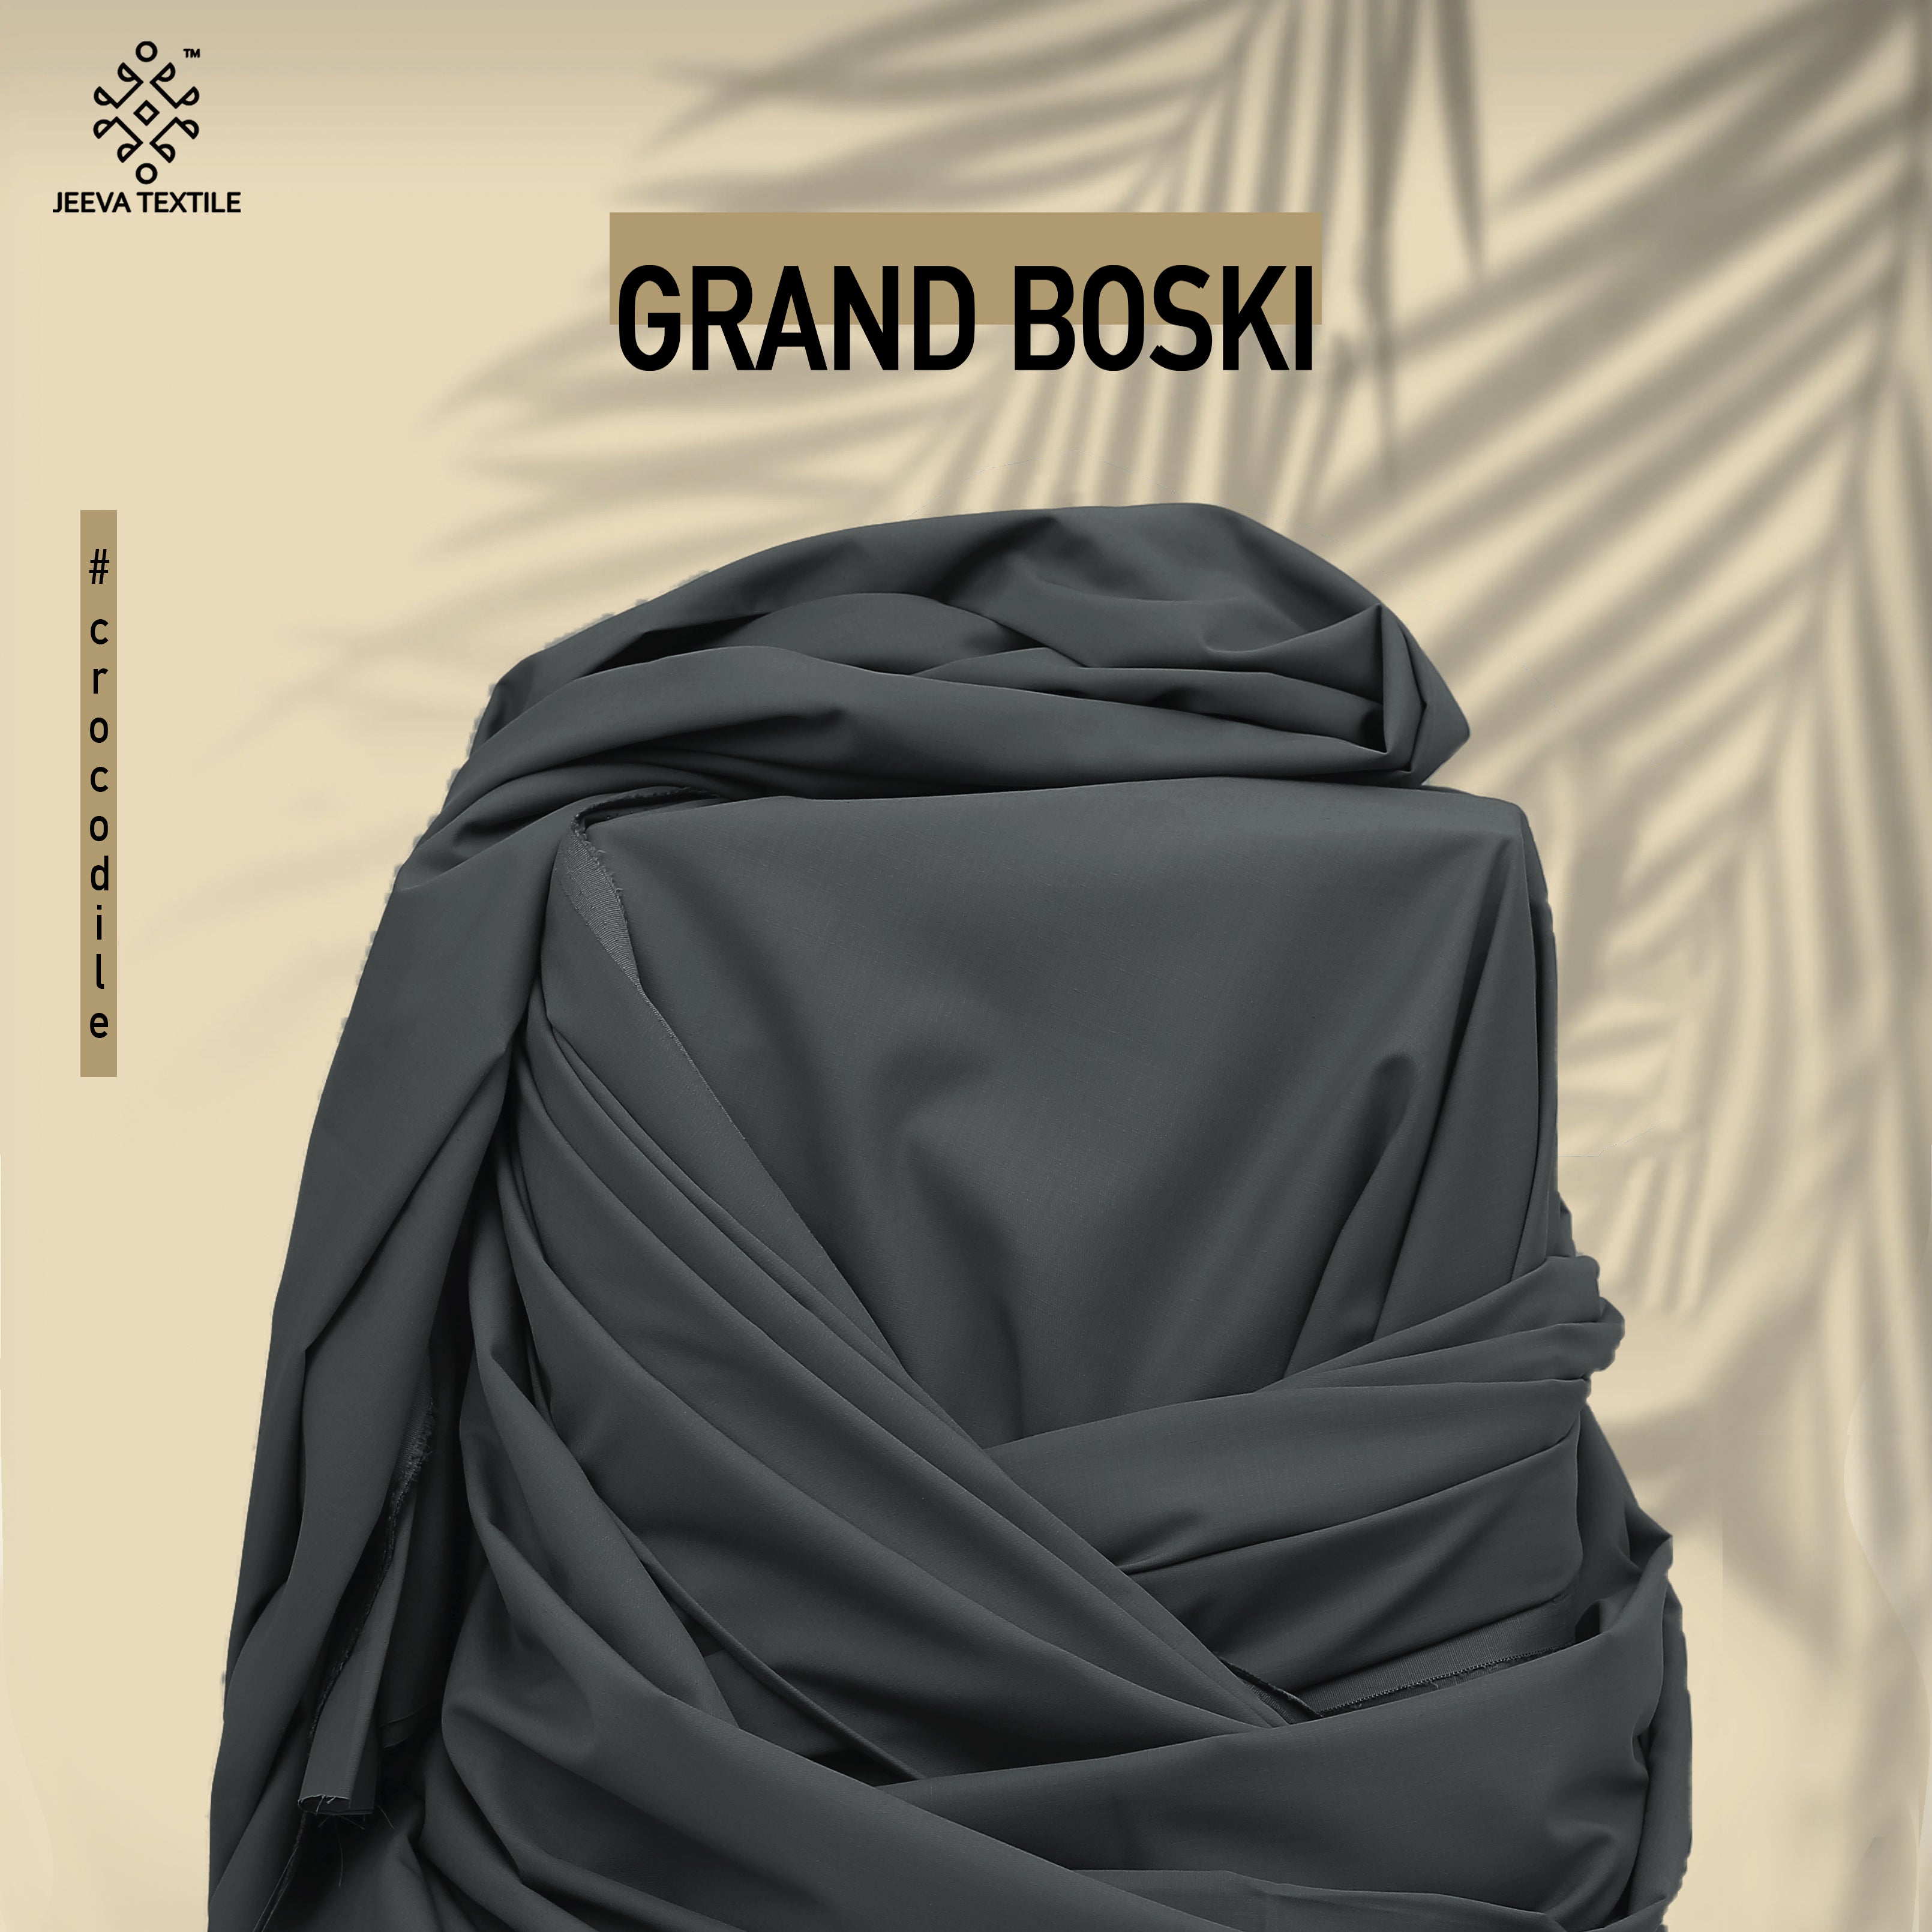 Grand Boski